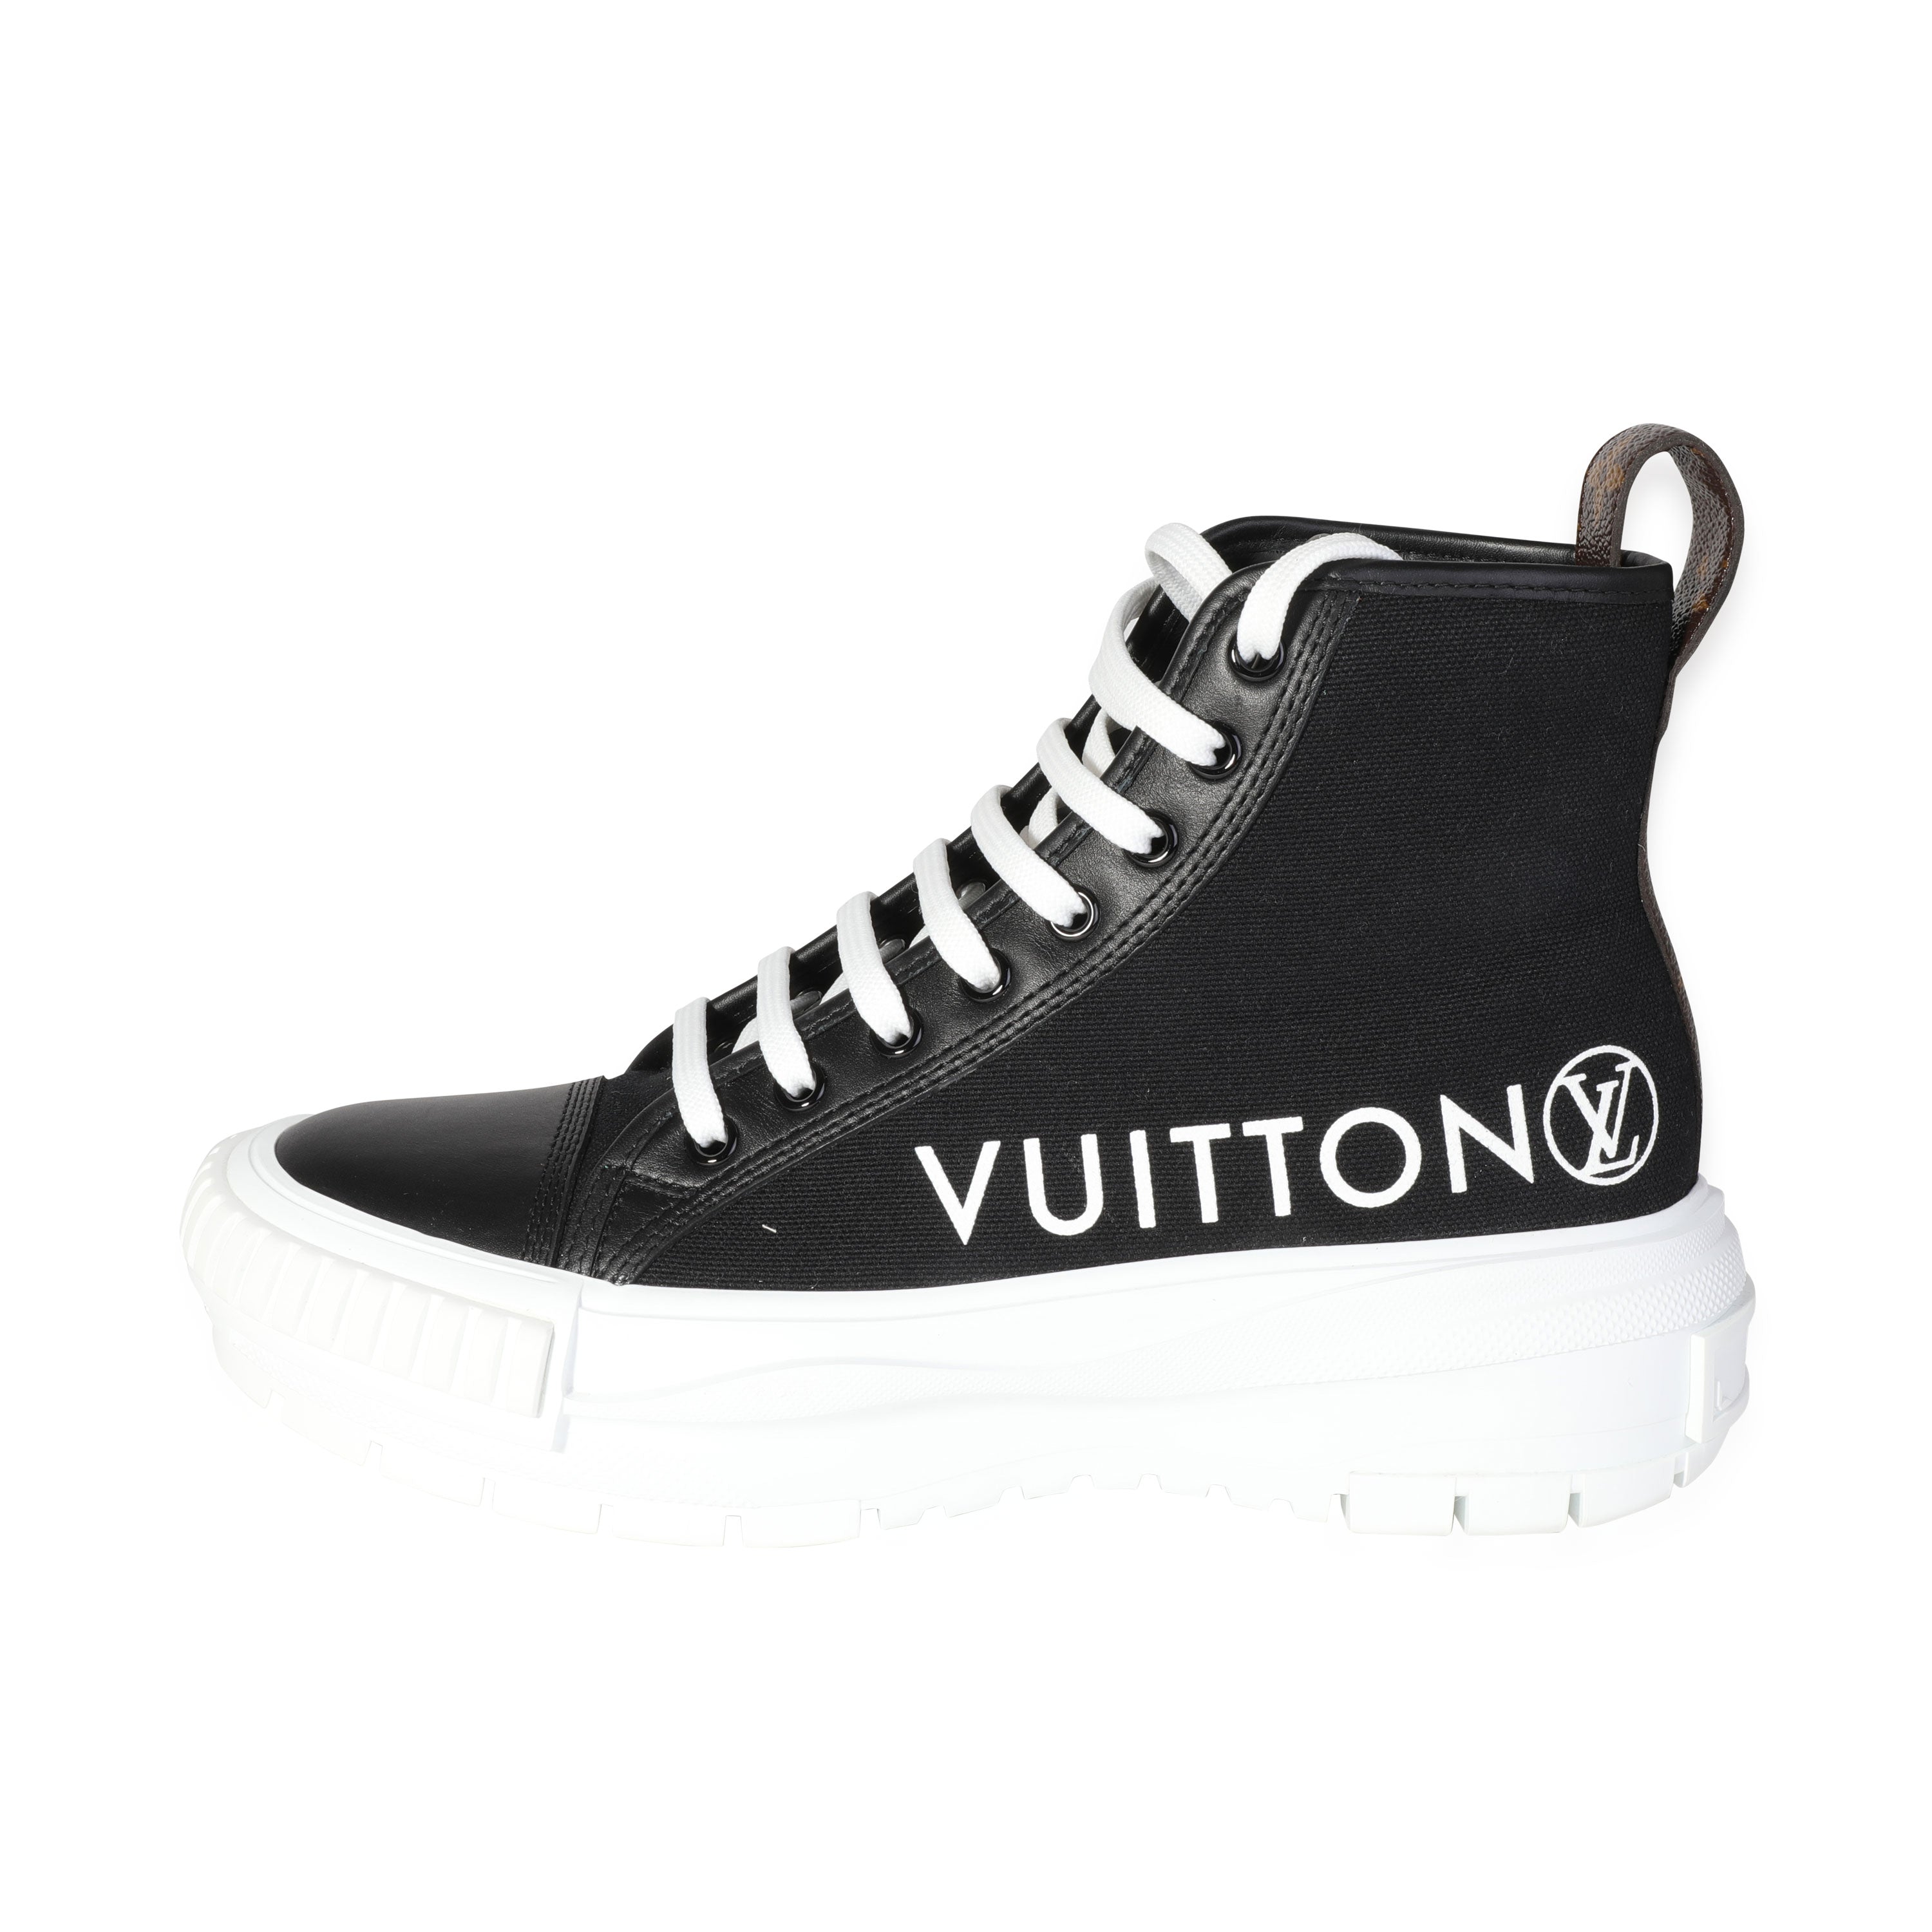 Louis Vuitton LV Squad Monogram Pink White Sneaker